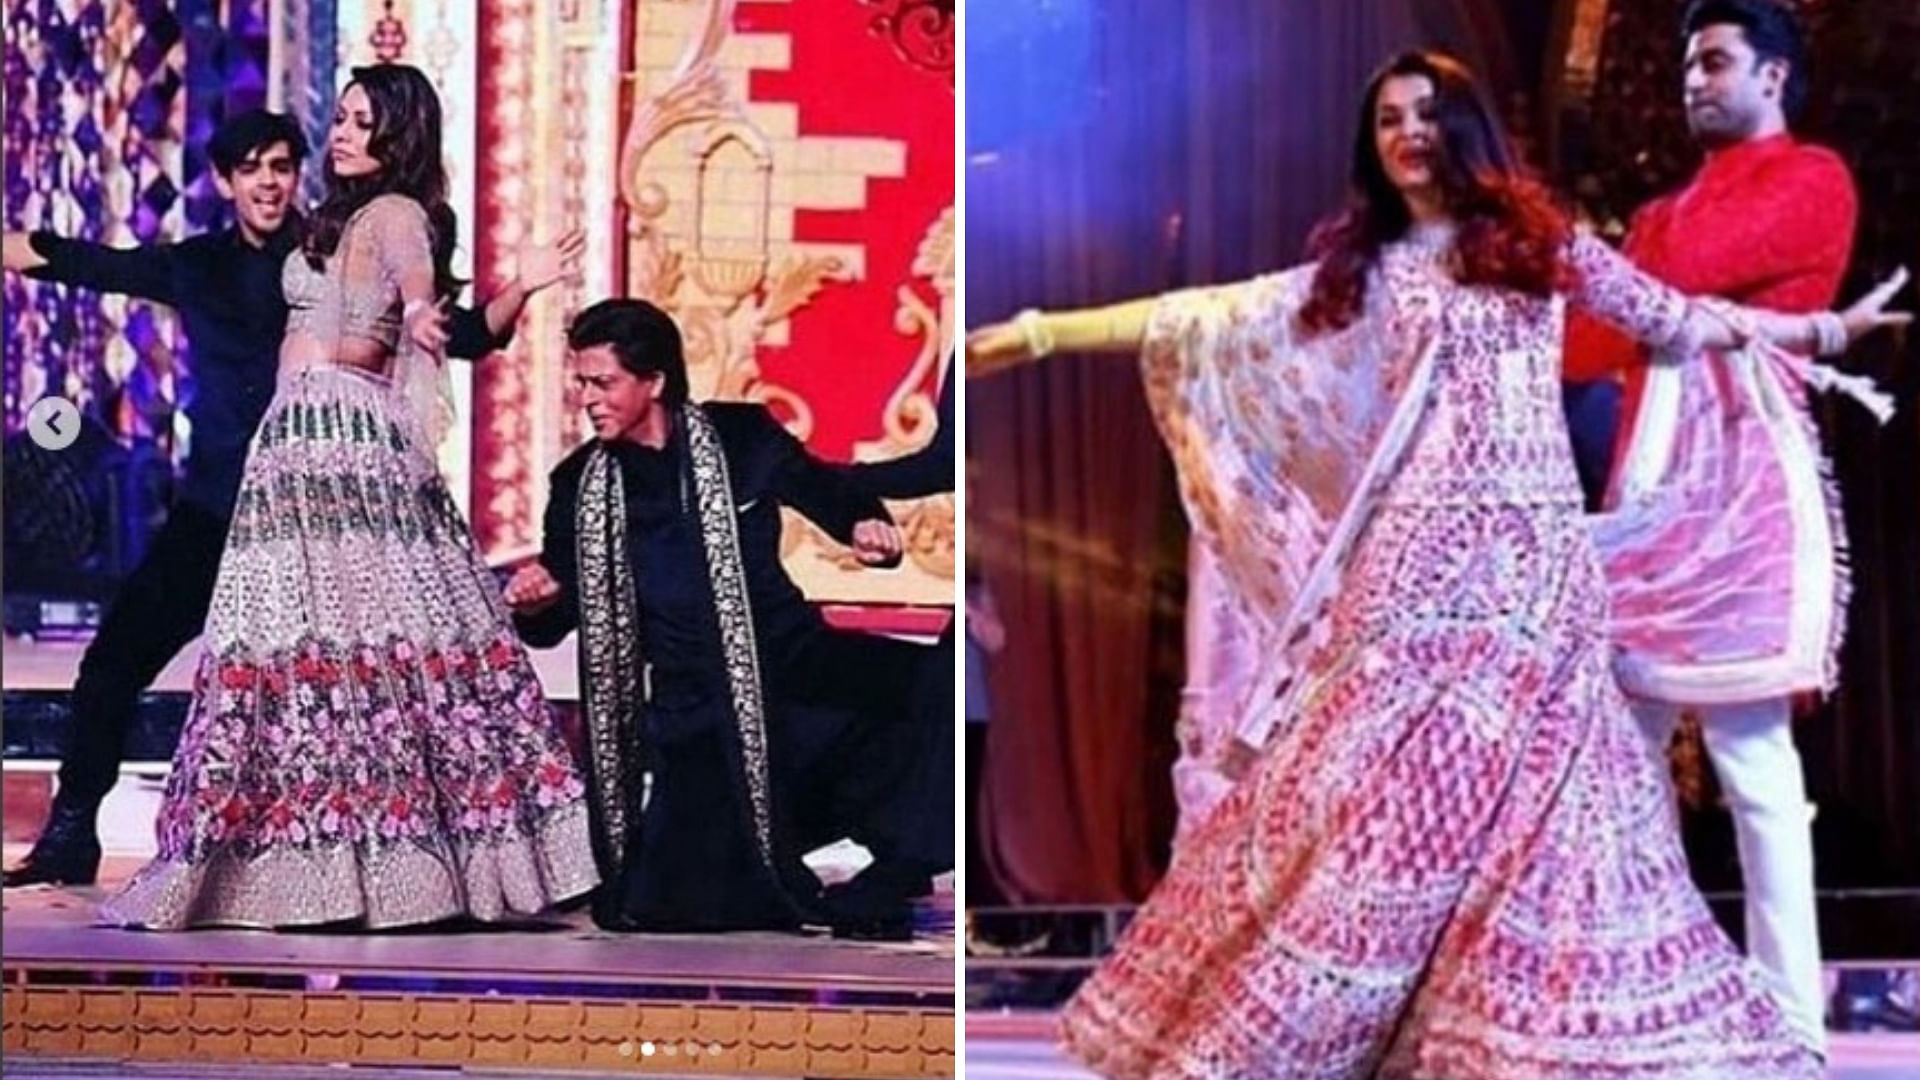 Shah Rukh and Gauri Khan and Abhishek and Aishwarya Bachchan perform at Isha Ambani and Anand Piramal’s pre-wedding bash in Udaipur.